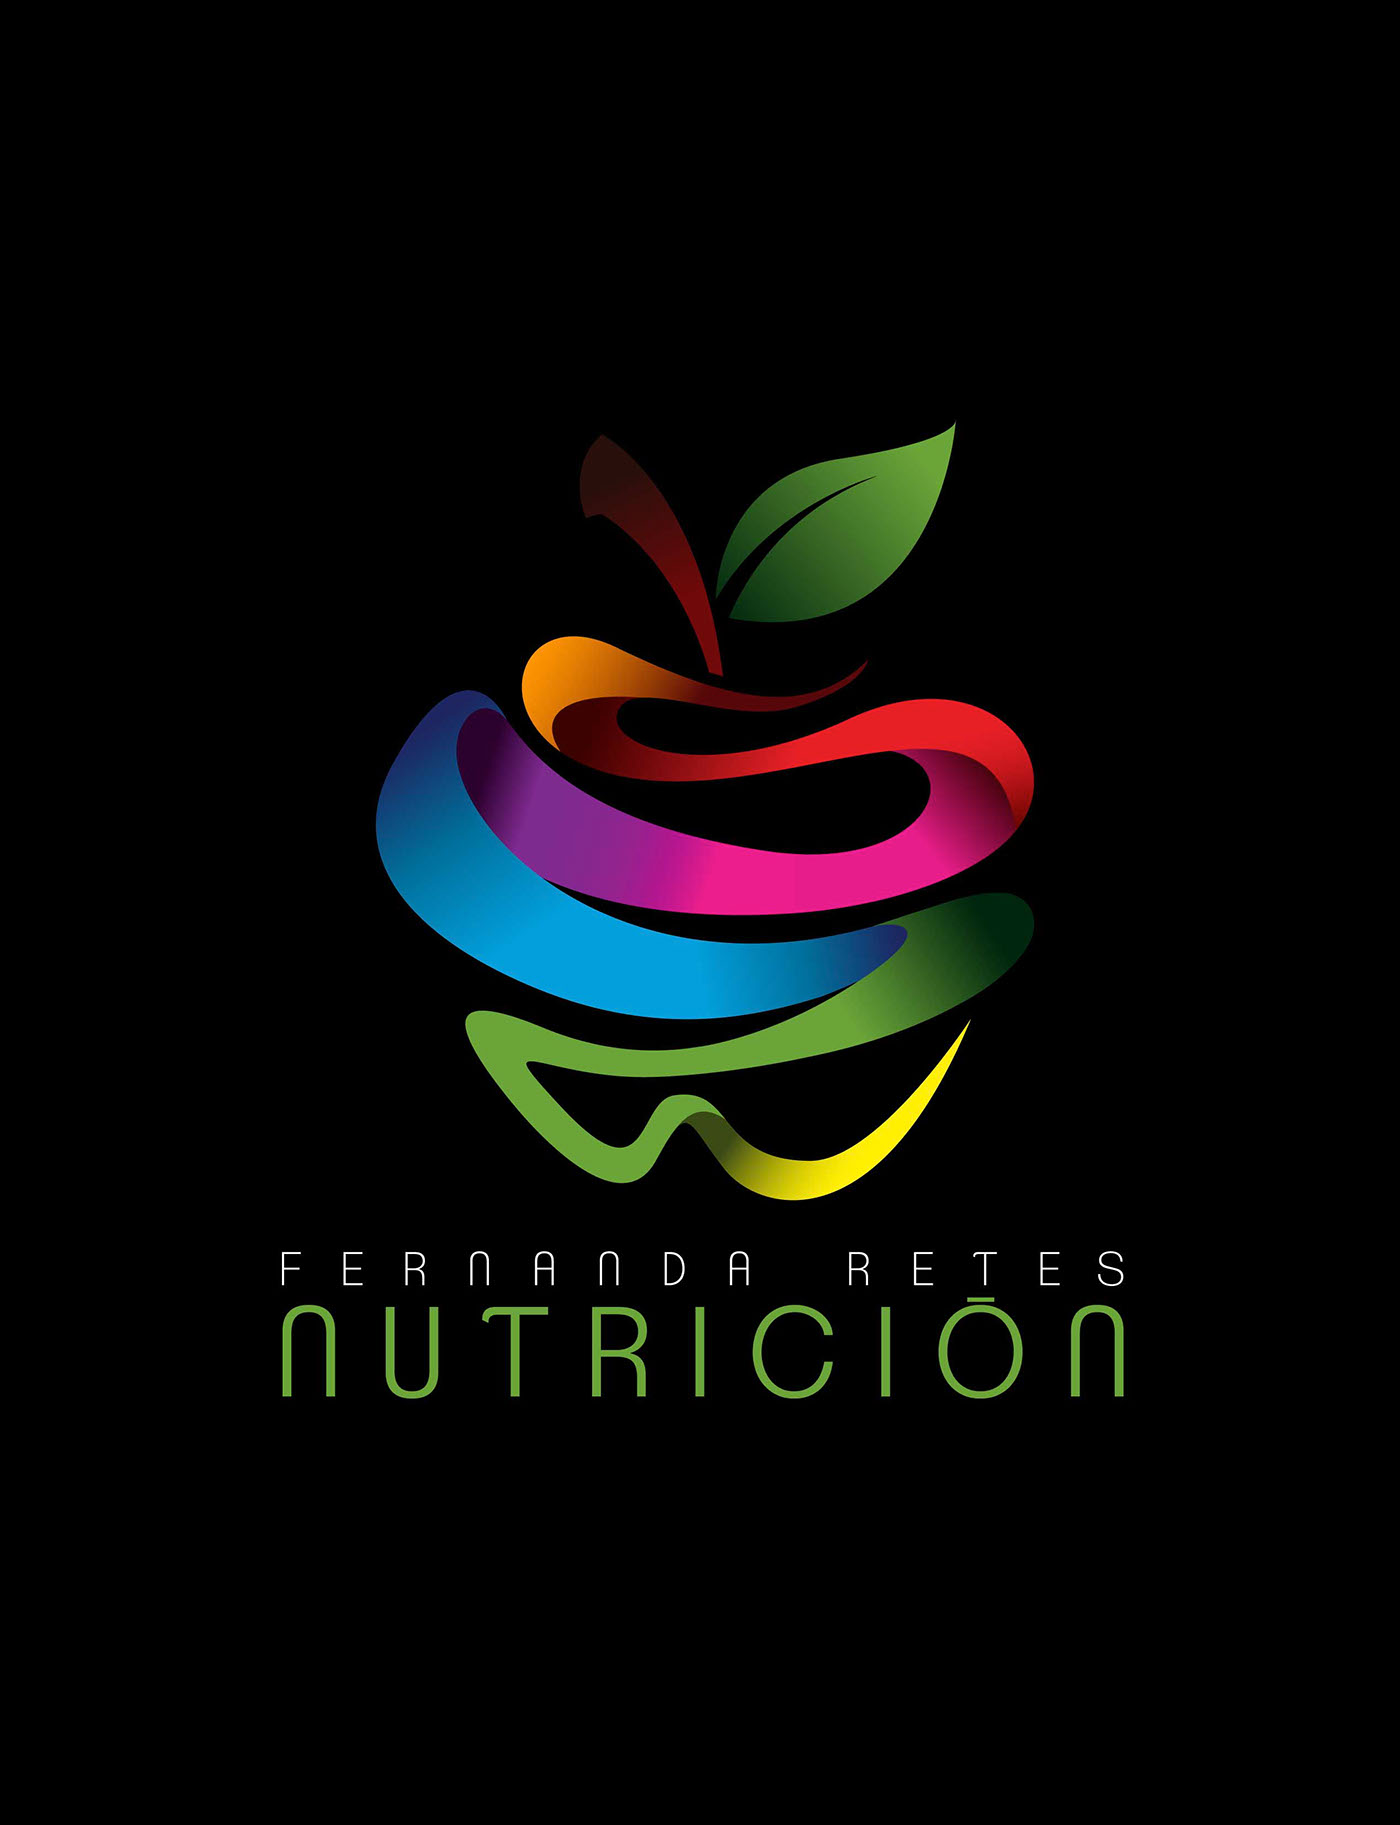 nutrition logo ideas 2